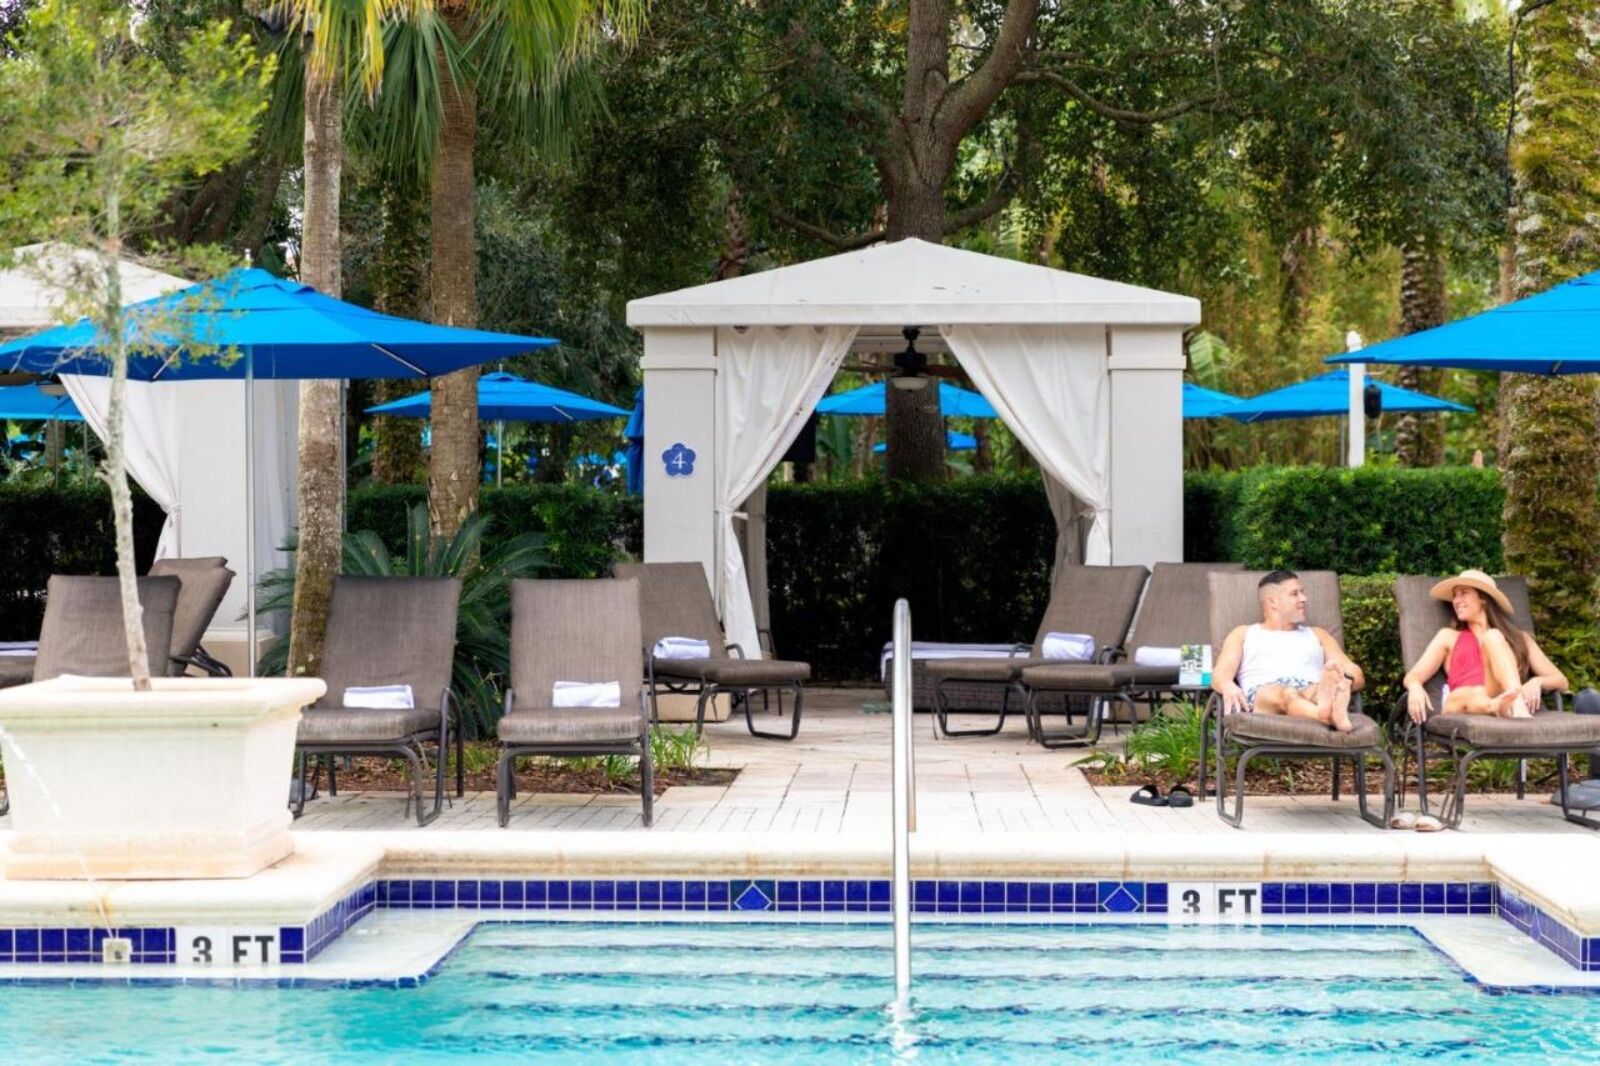 Poolside at Omni Orlando Resort at Championsgate one of the best Orlando resorts